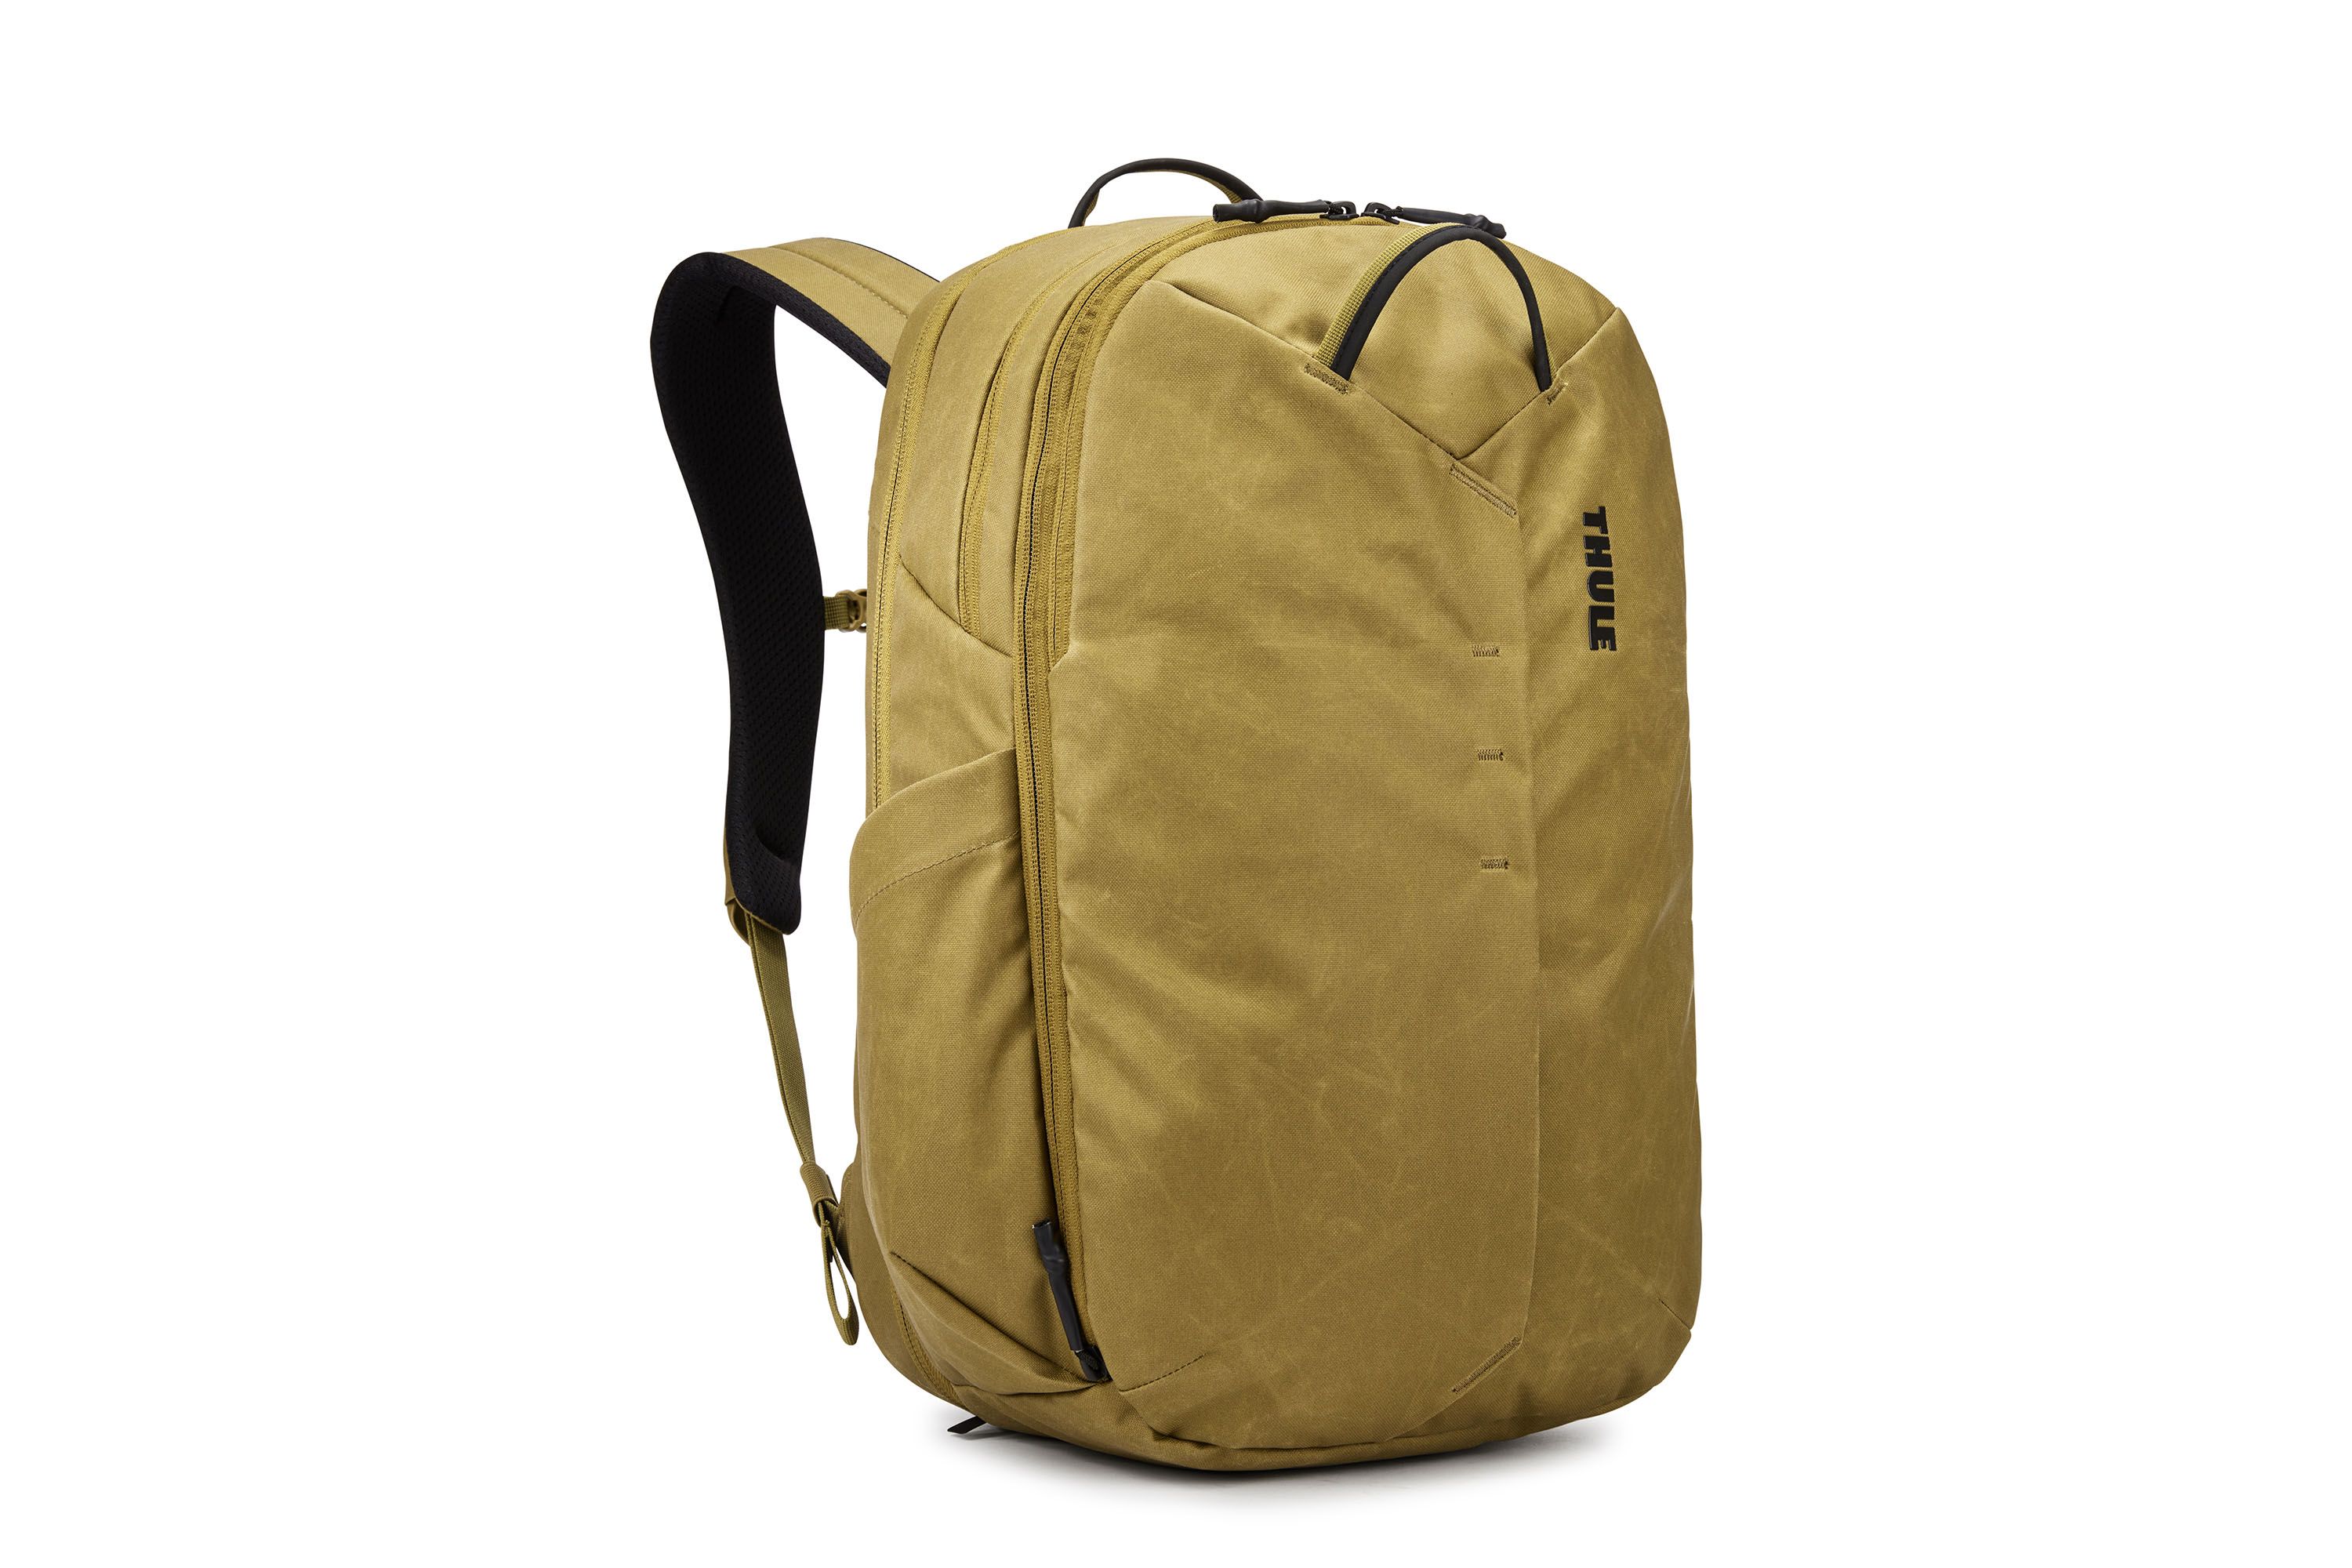 Thule Aion Black 40L Travel Backpack w/ Laptop Pocket